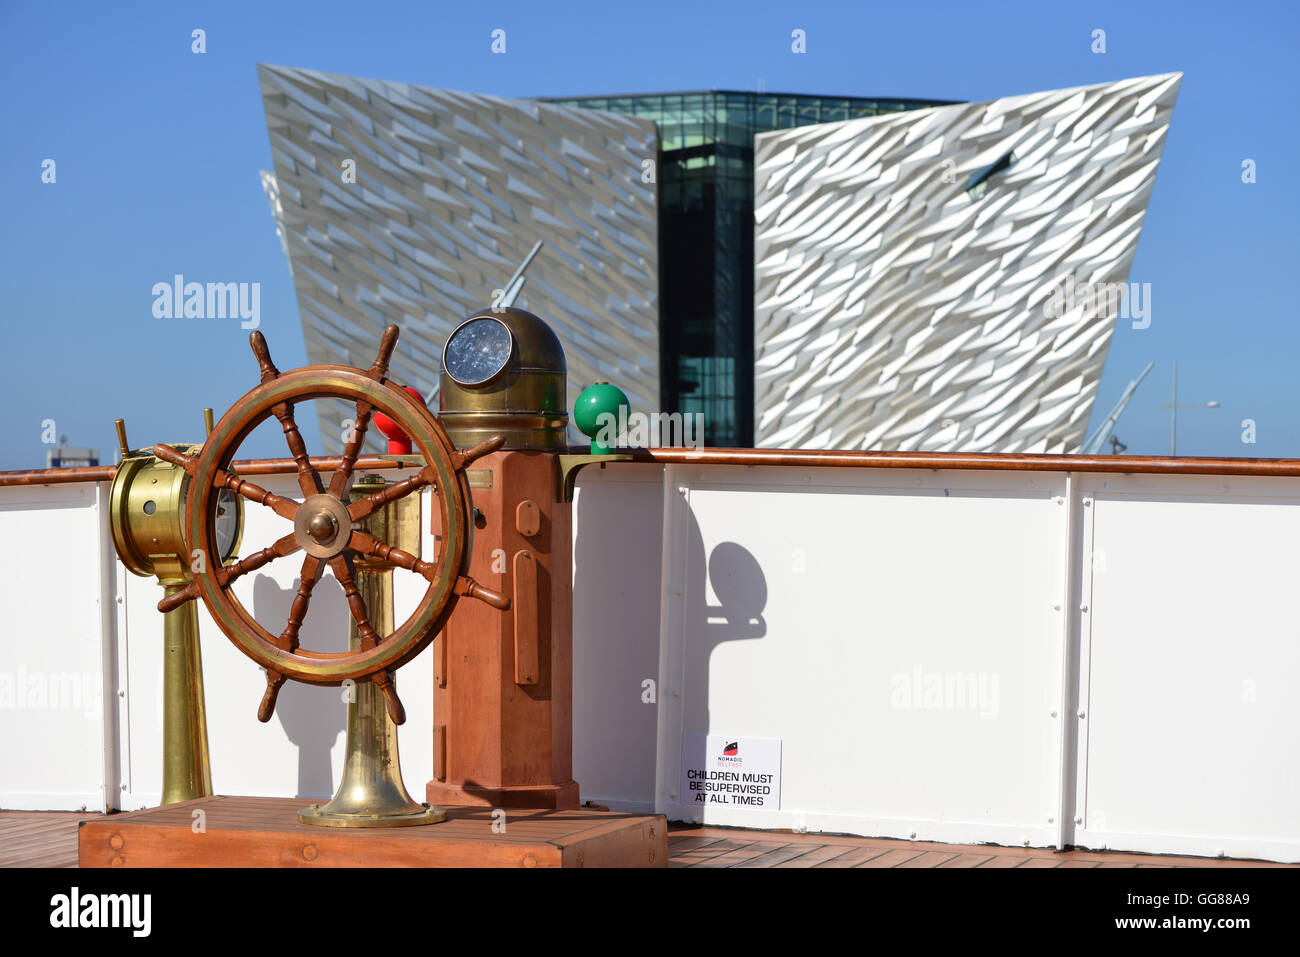 Das SS Nomadic Liegekind des Titanic Building, Belfast Stockfoto